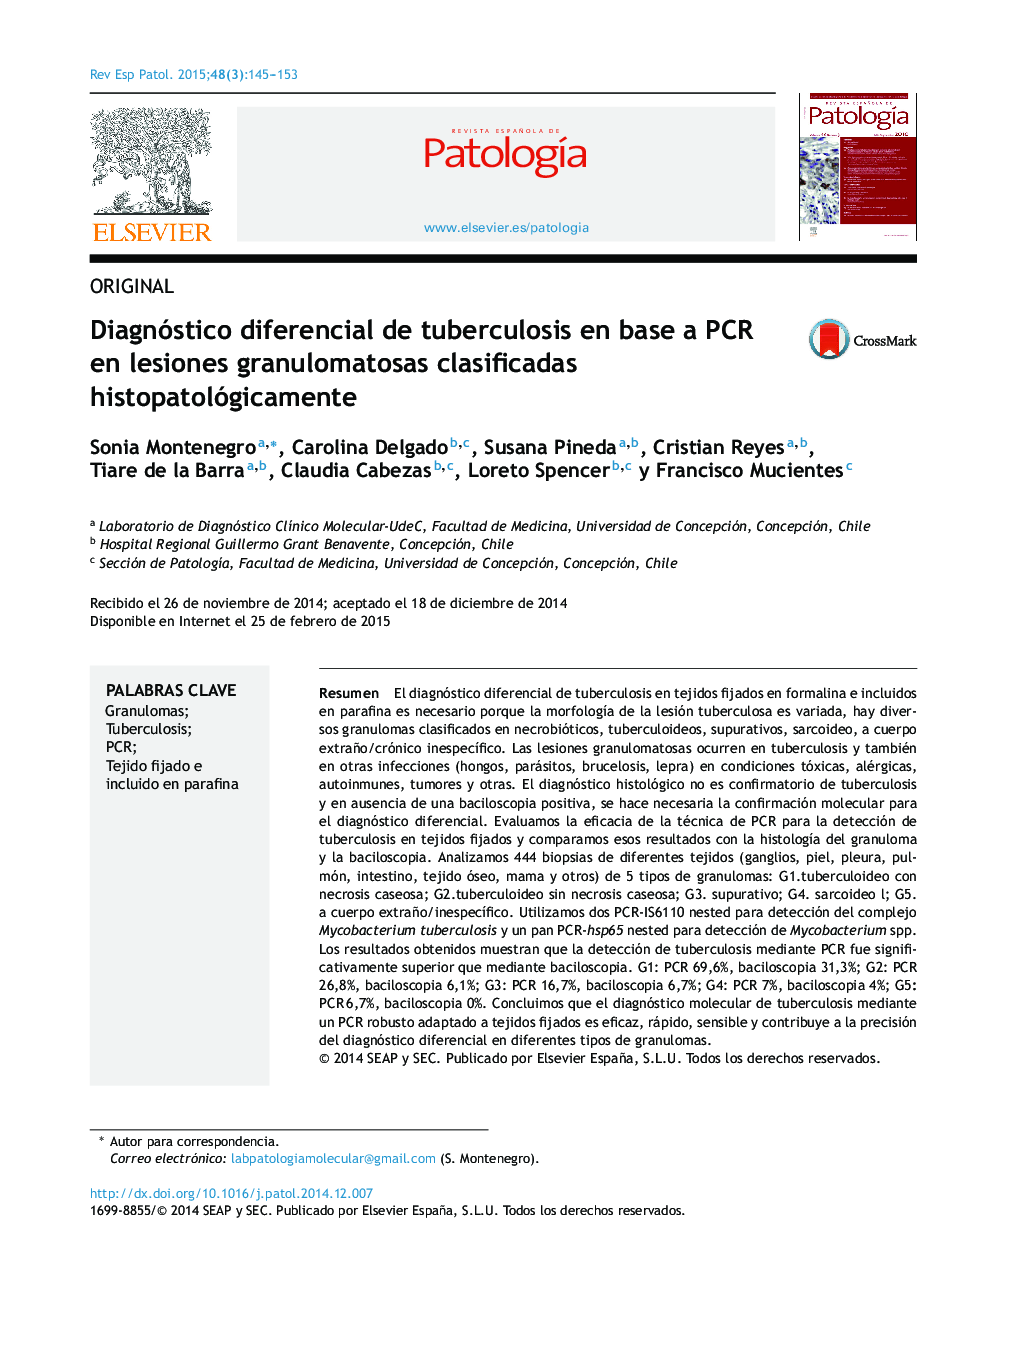 Diagnóstico diferencial de tuberculosis en base a PCR en lesiones granulomatosas clasificadas histopatológicamente